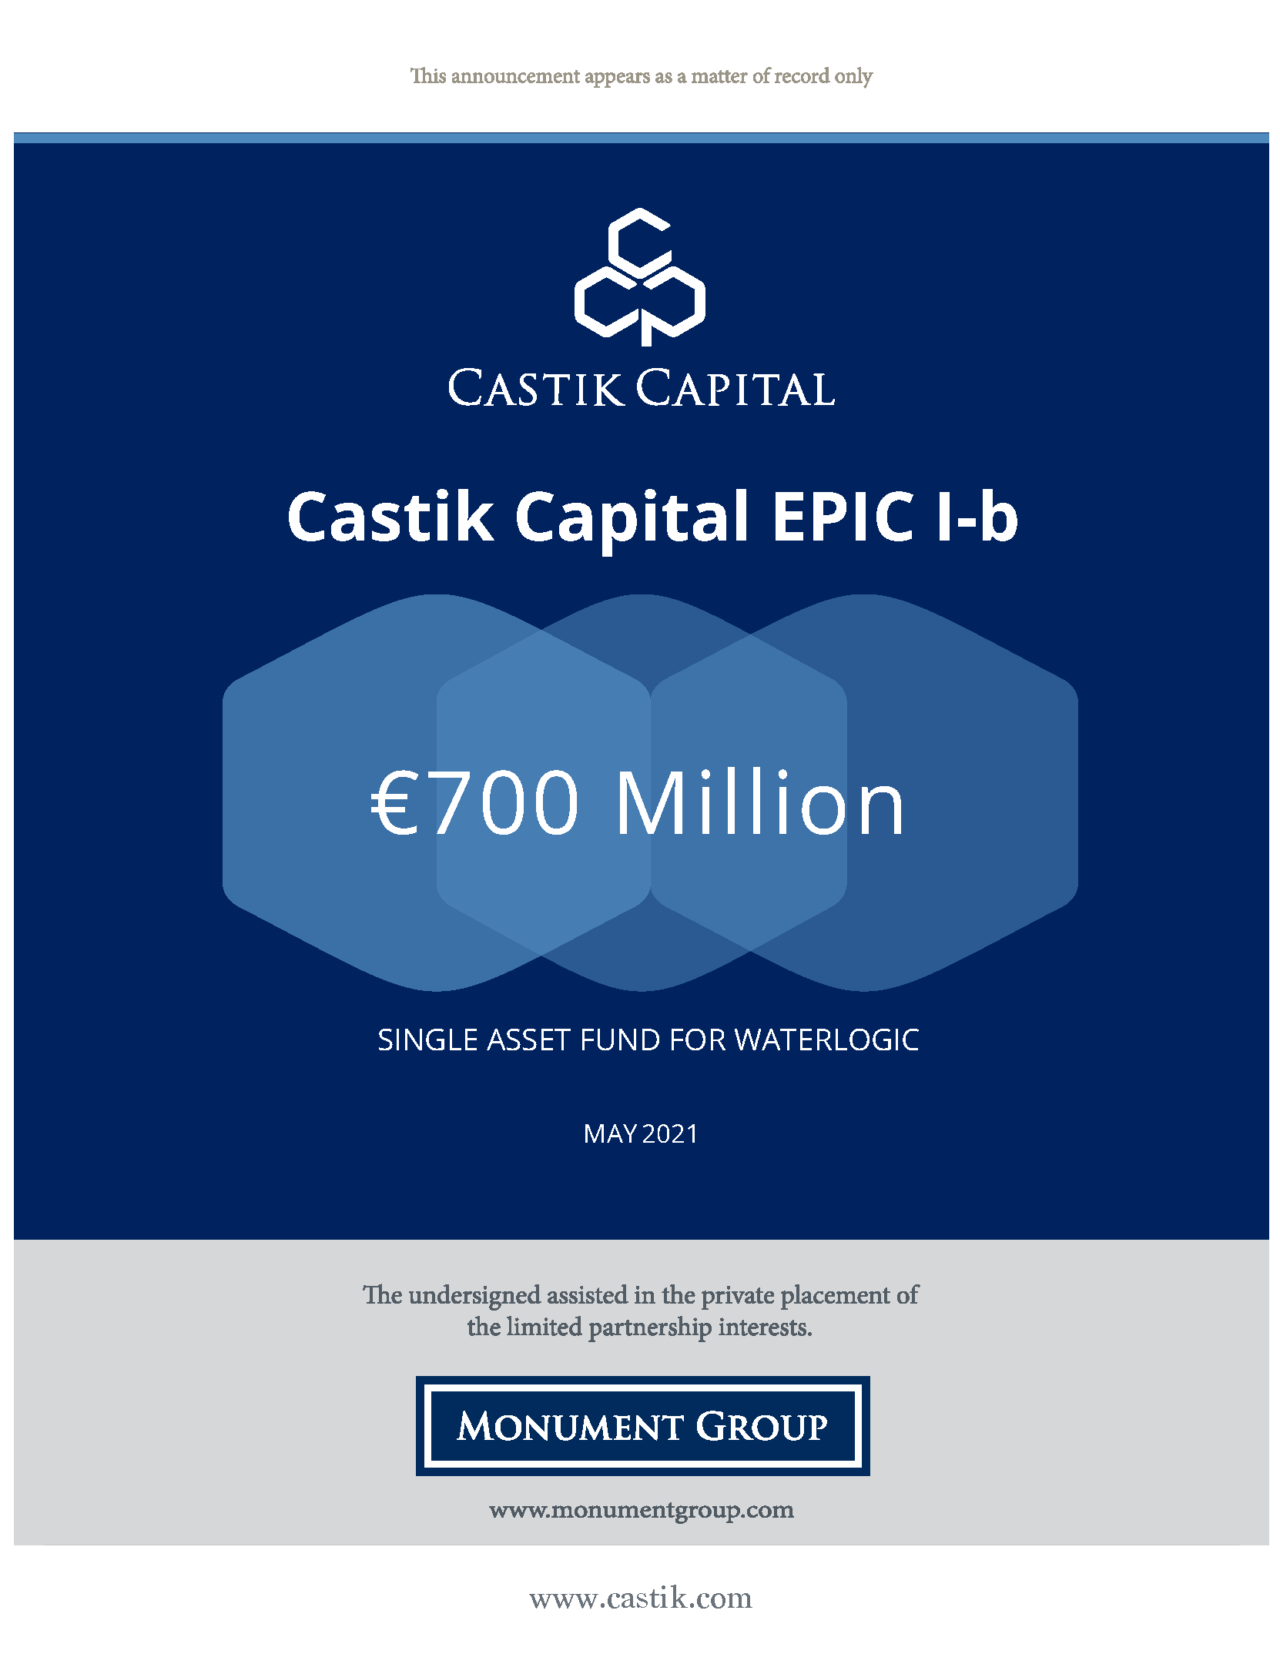 Castik Capital EPIC I-b